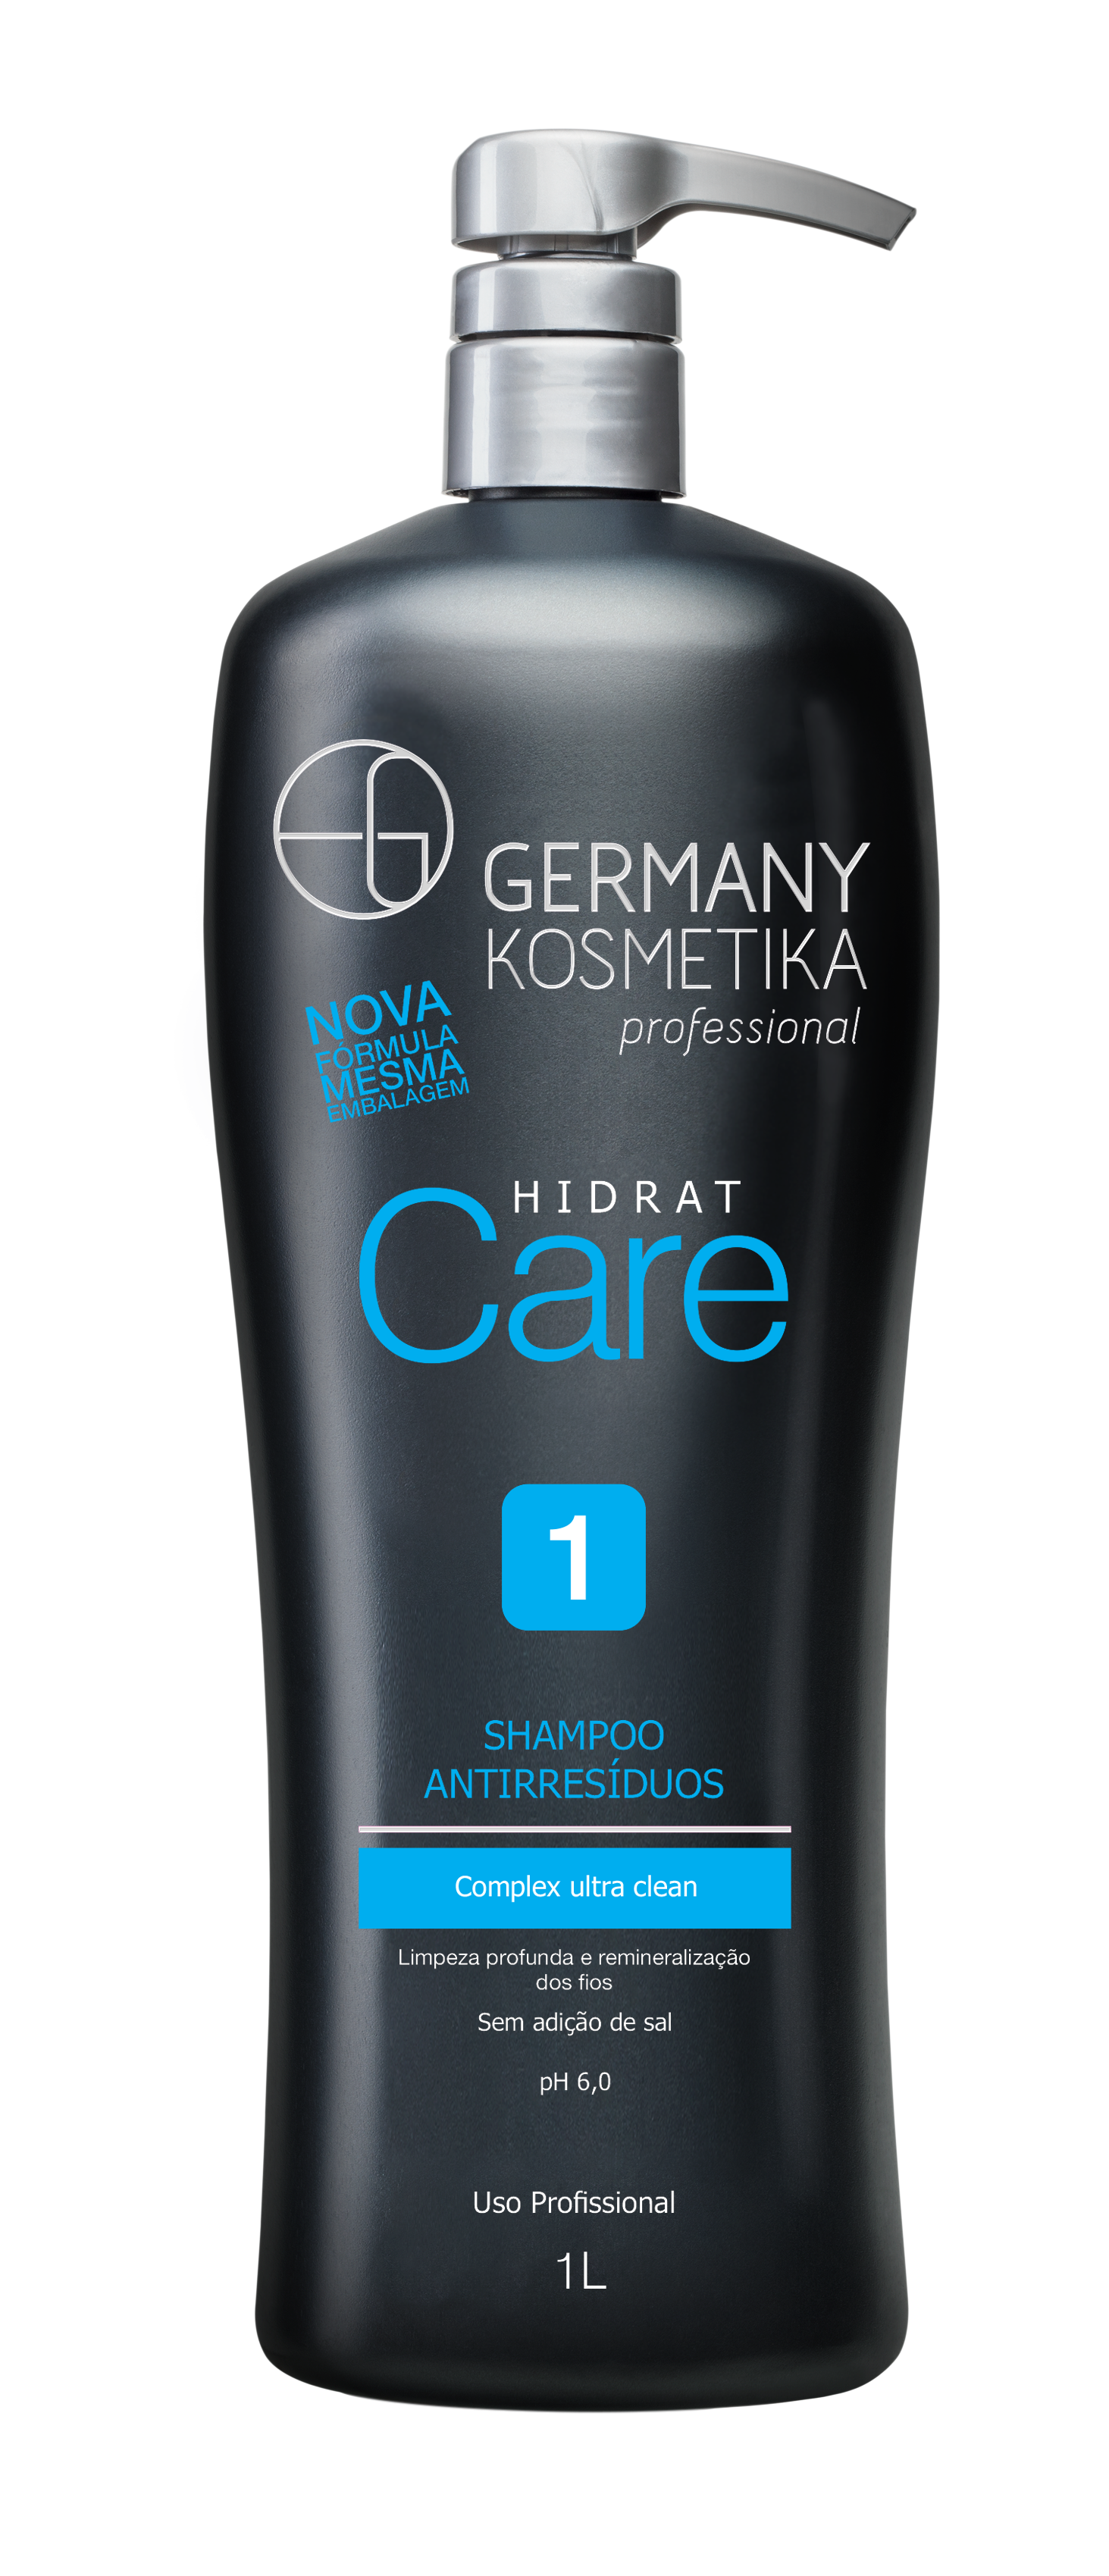 GERMANY Hidrat Care 1 Shampoo Antirresiduos